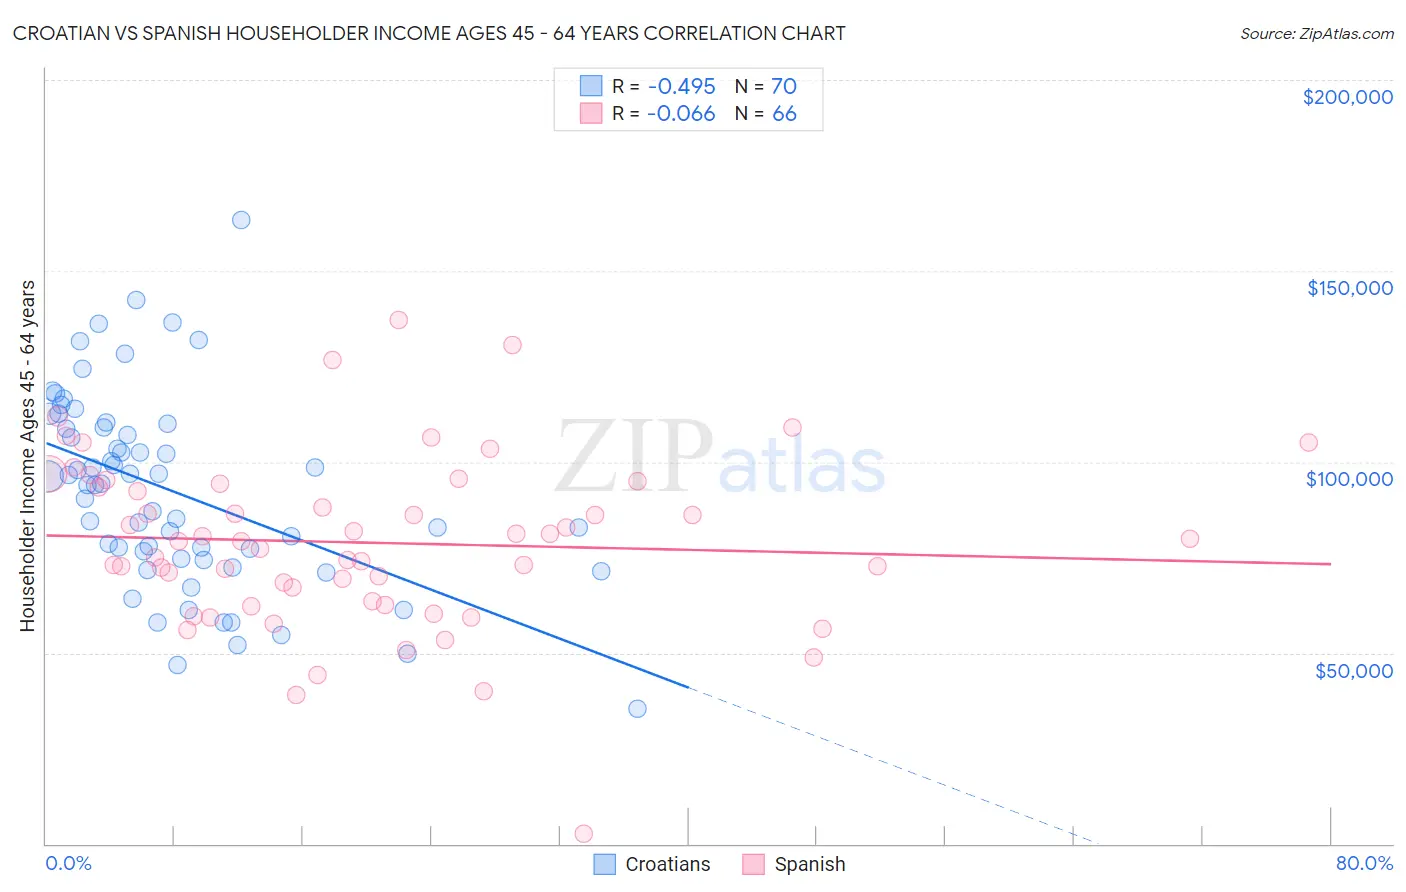 Croatian vs Spanish Householder Income Ages 45 - 64 years